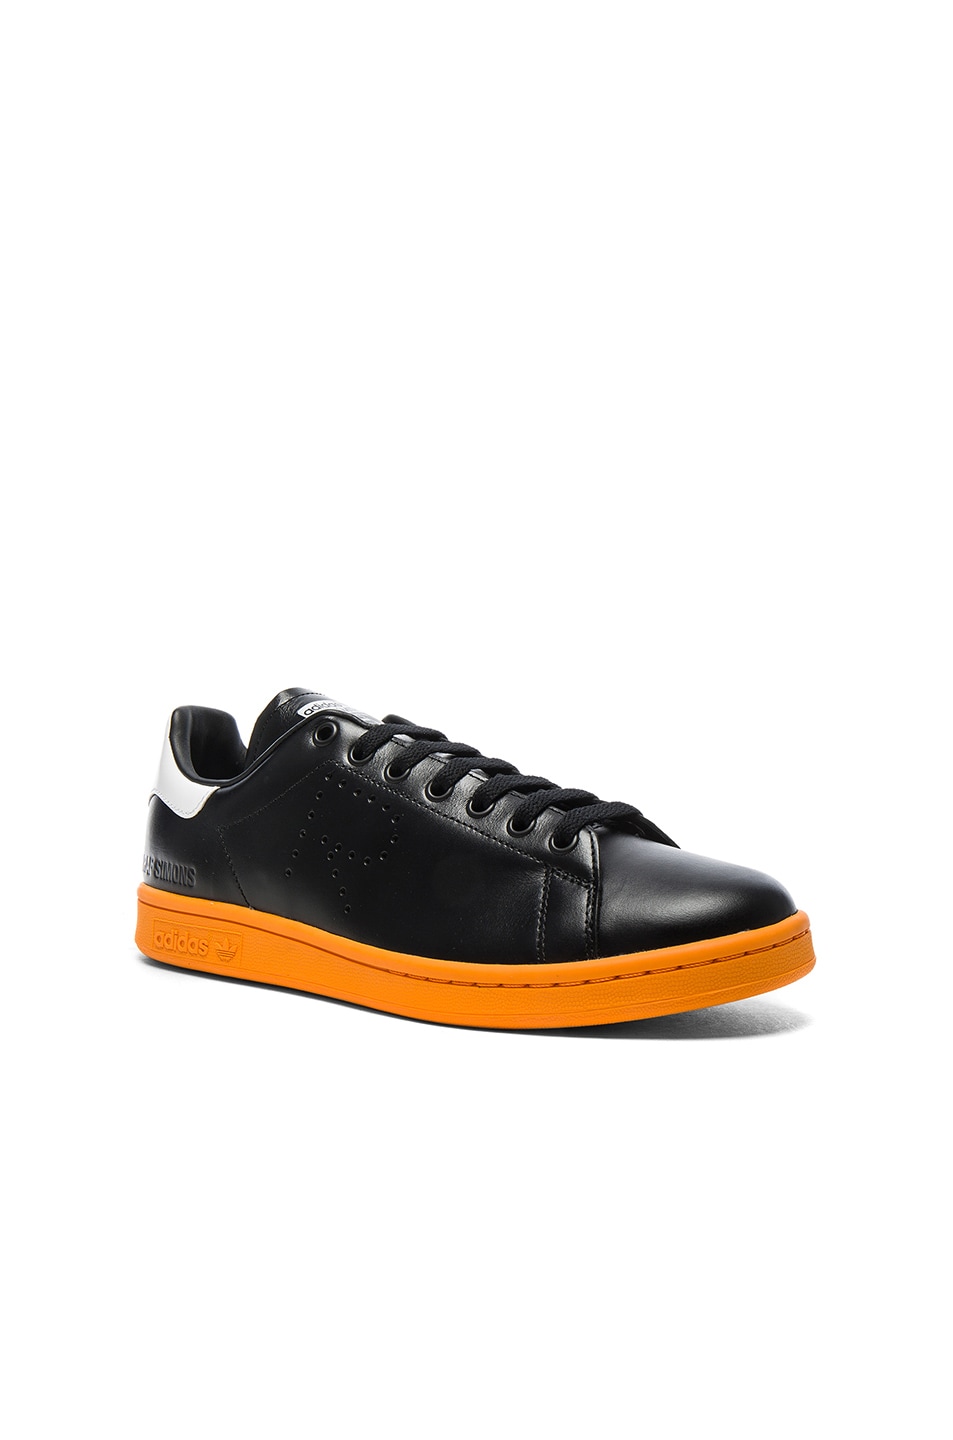 Image 1 of Raf Simons x Adidas Leather Stan Smith Sneakers in Black, Bright Orange & White